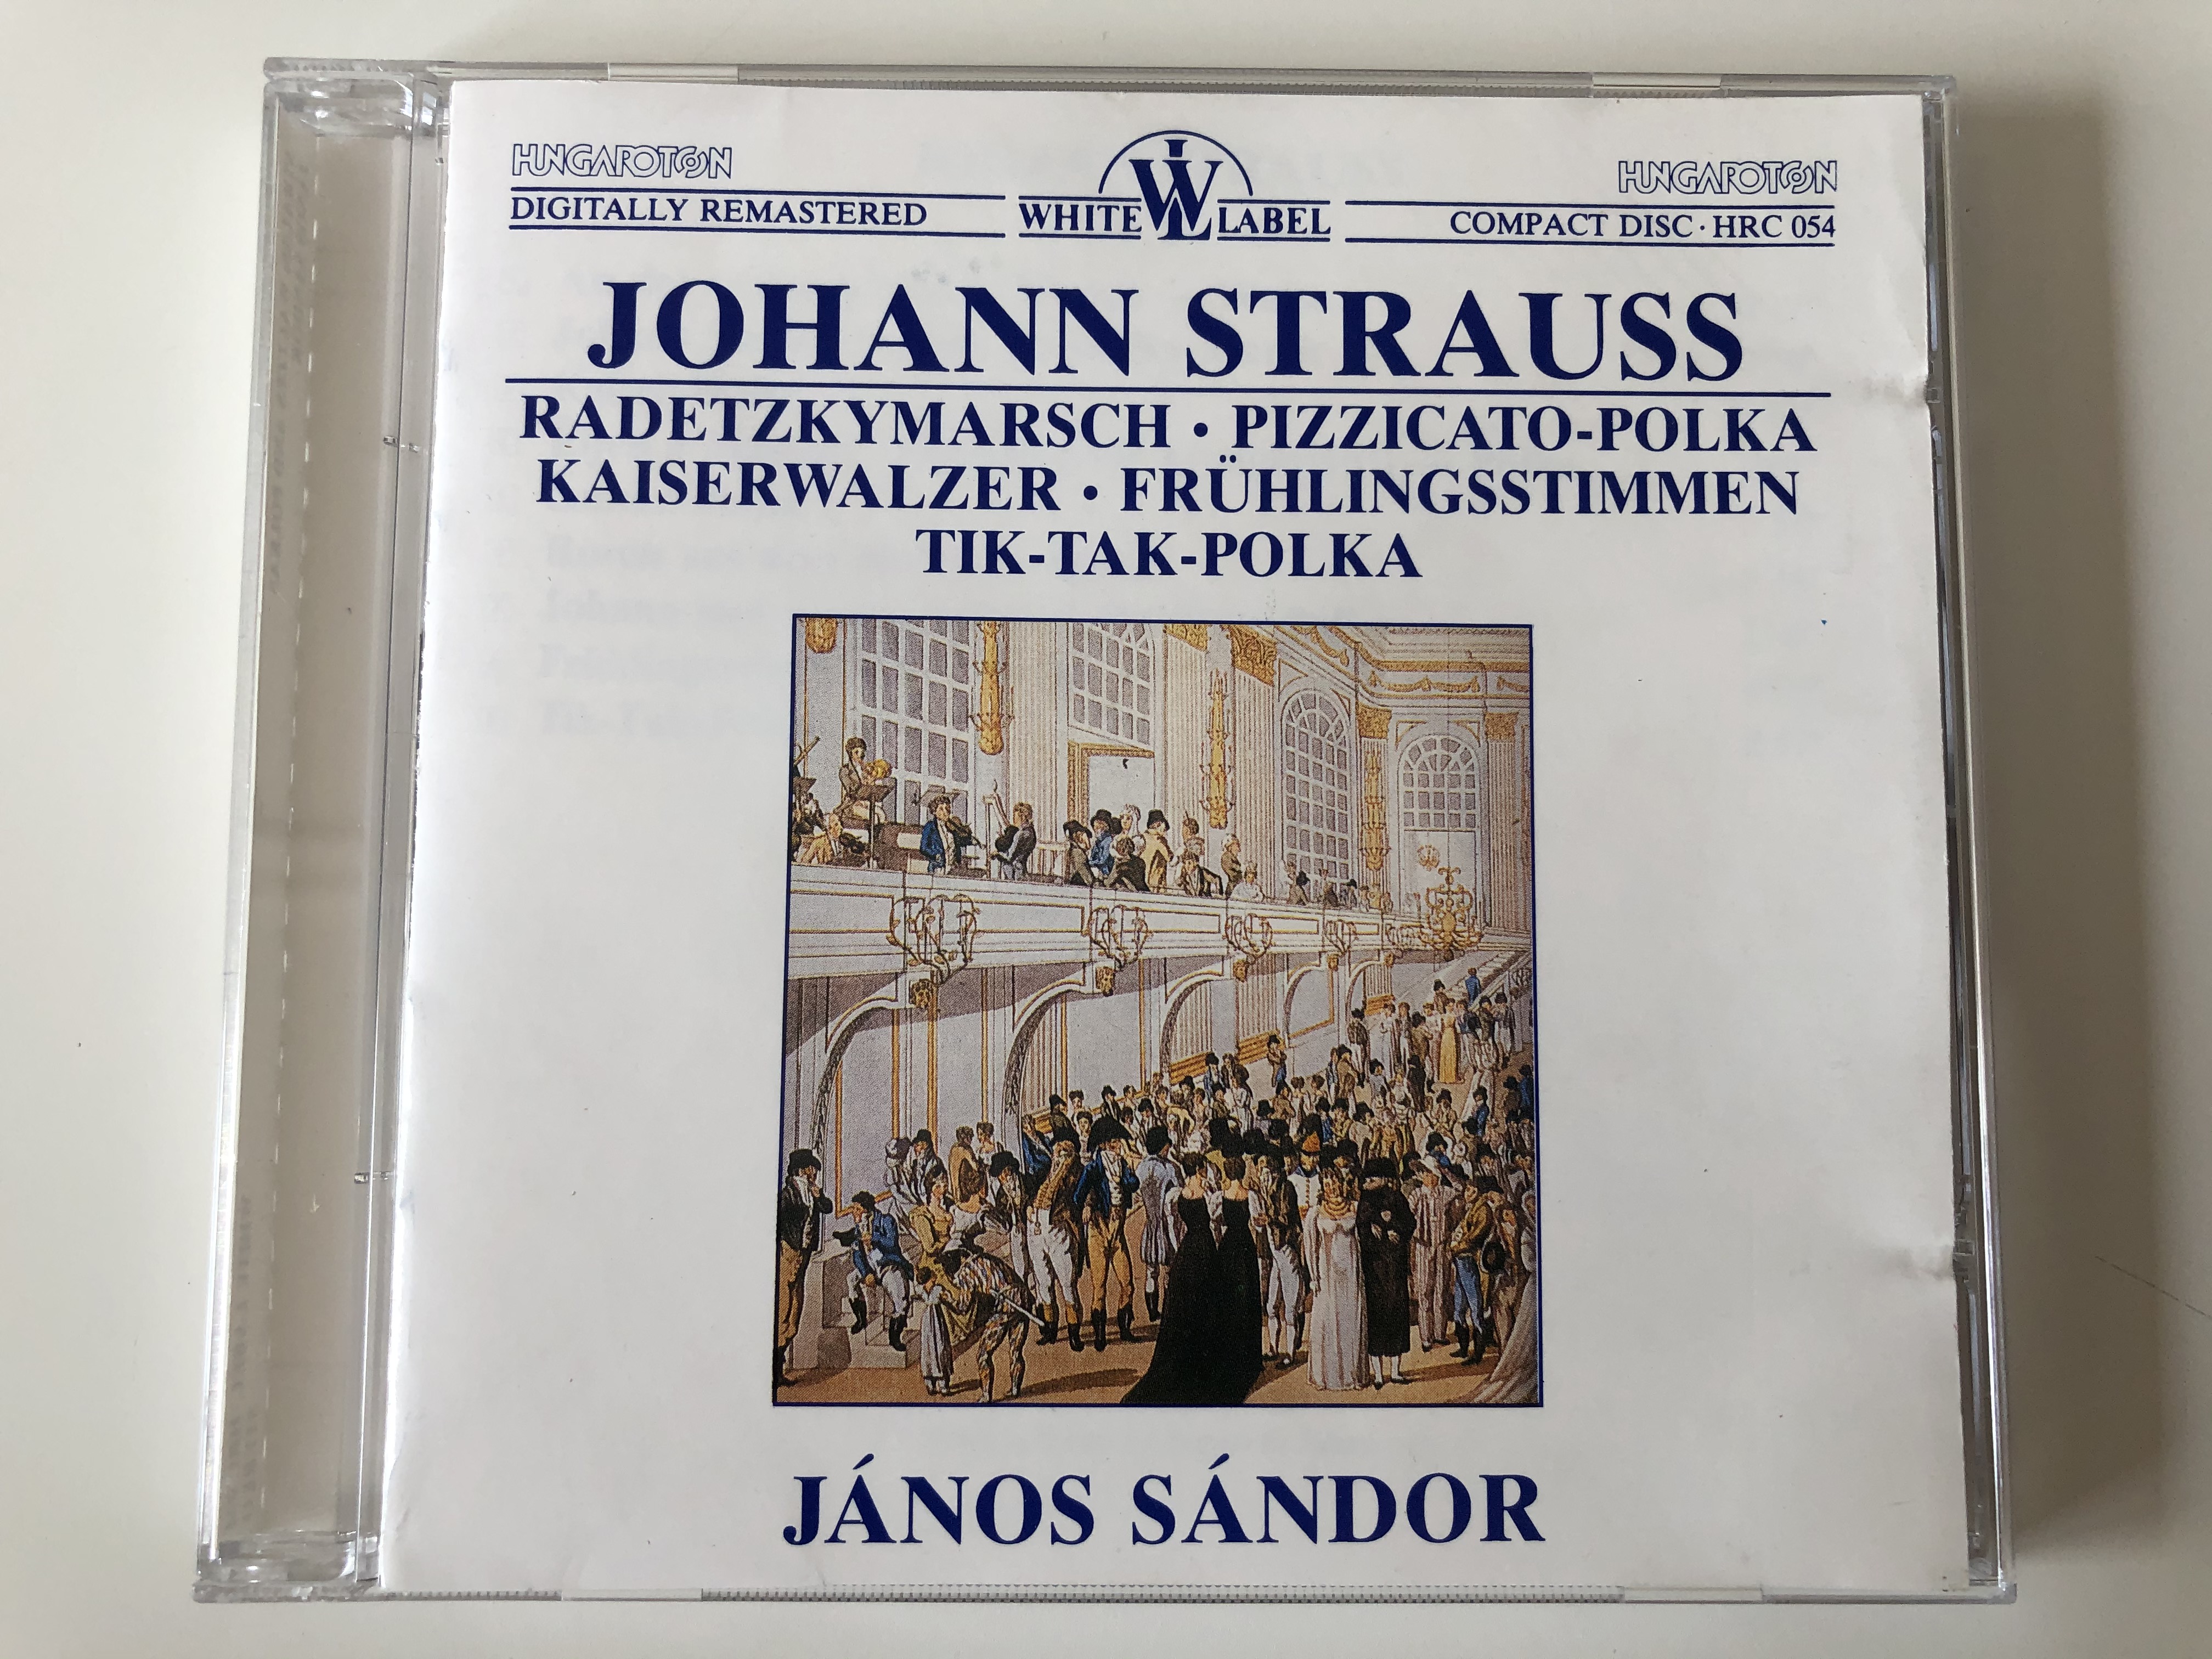 johann-strauss-radetzkymarsch-pizzicato-polka-kaiserwalzer-fr-hlingsstimmen-tik-tak-polka-janos-sandor-hungaroton-audio-cd-1987-stereo-hrc-054-1-.jpg